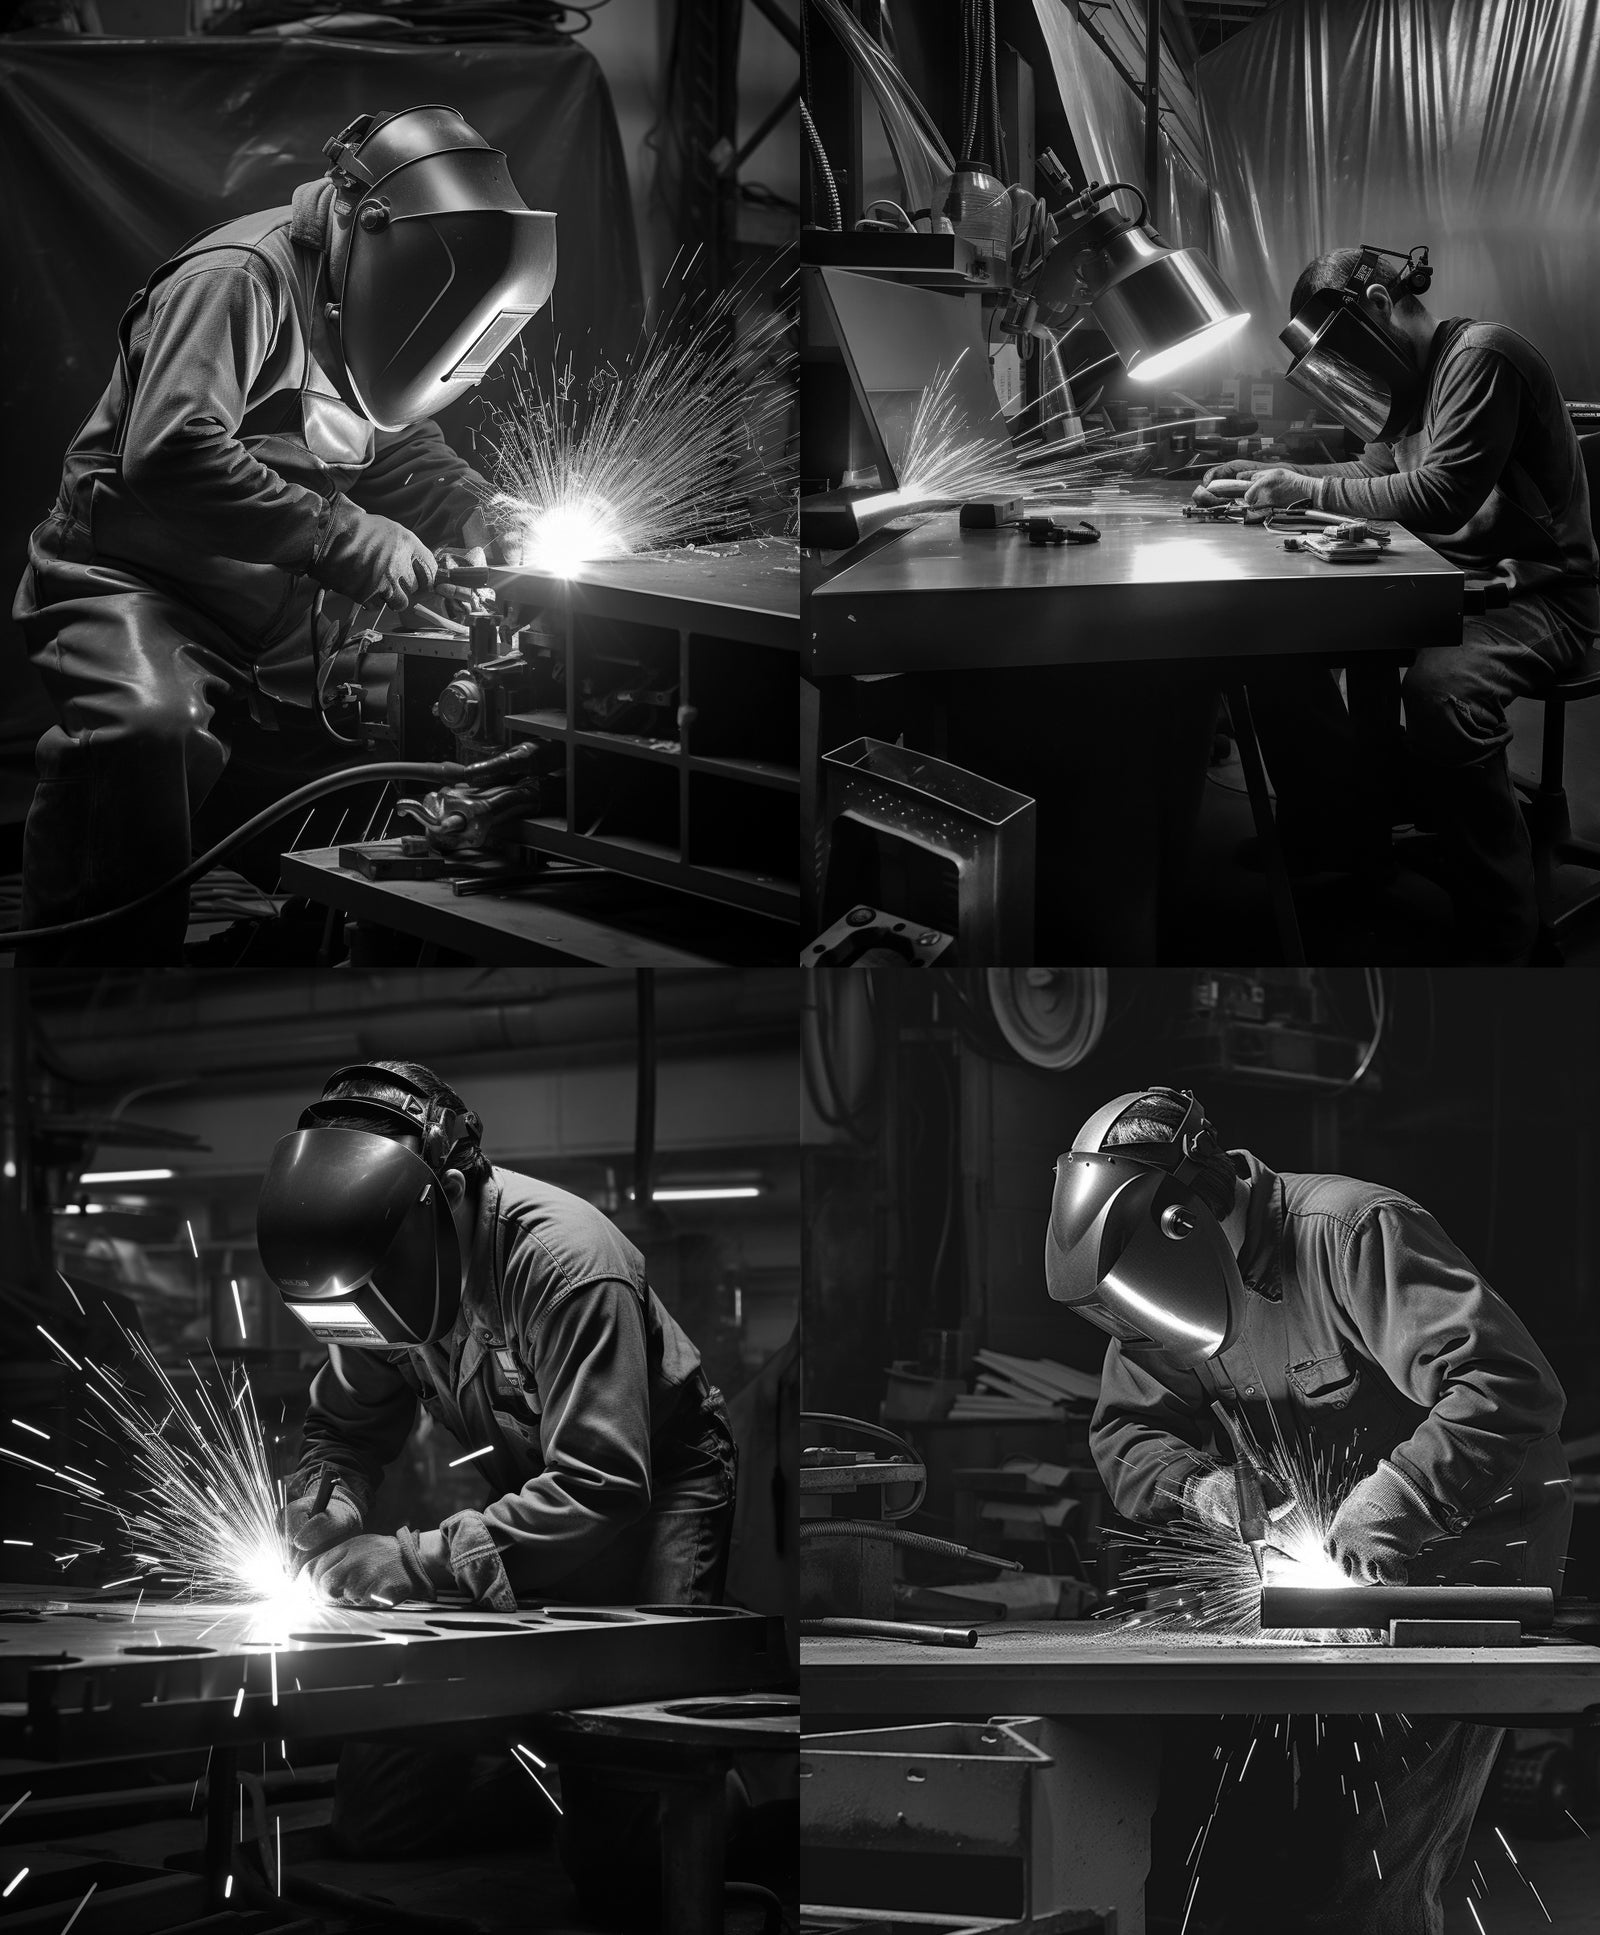 Fobest custom range hood crafteman production pictures